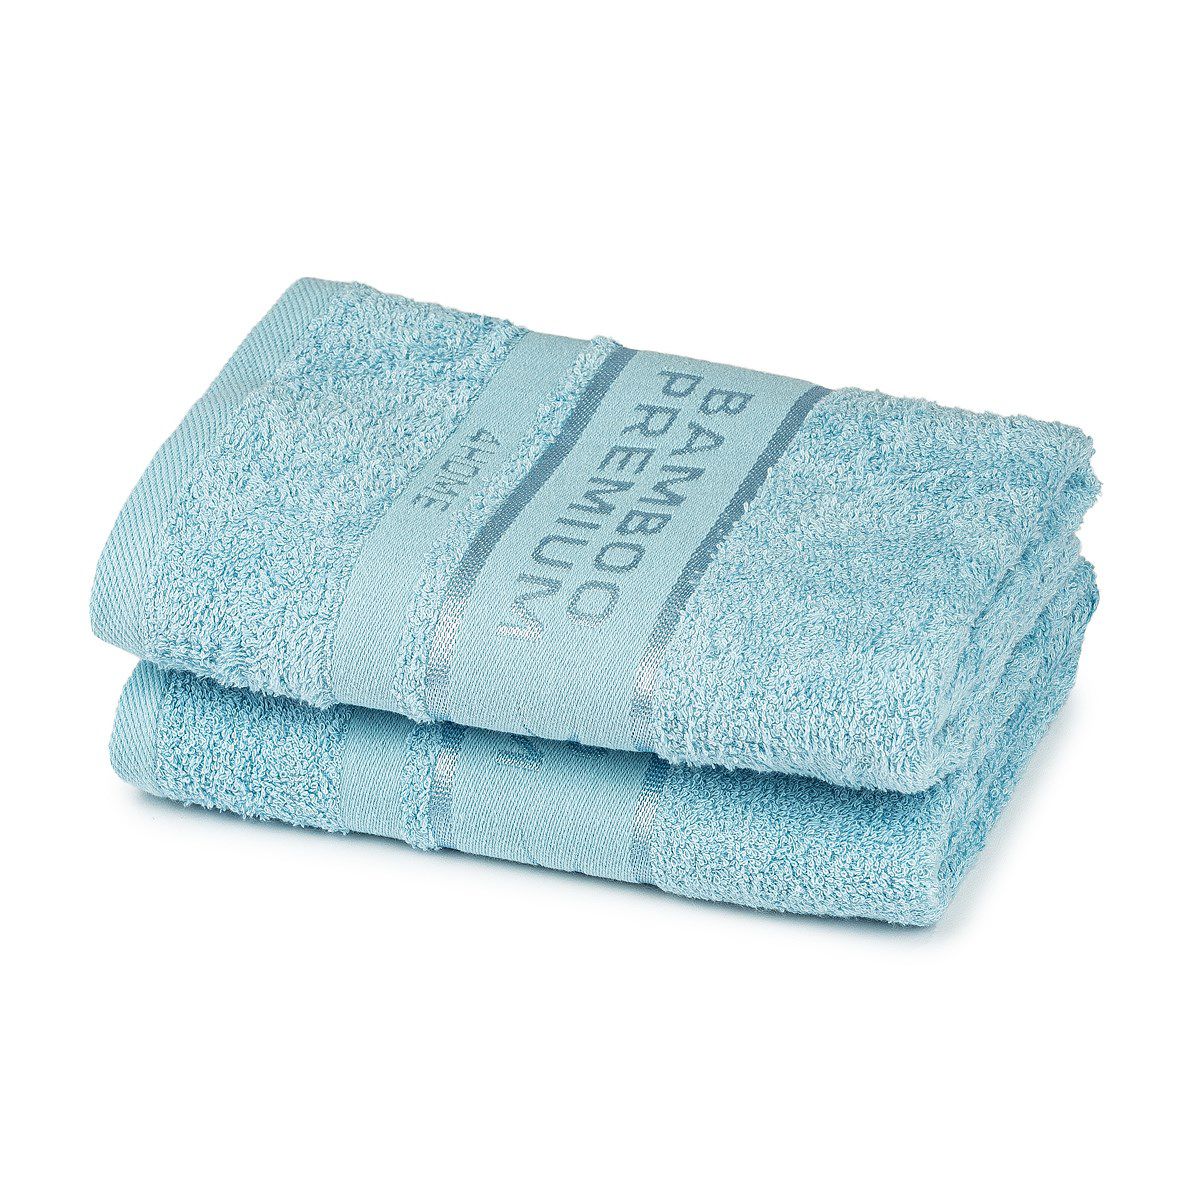 4Home Bamboo Premium ručník světle modrá, 50 x 100 cm, sada 2 ks - 4home.cz